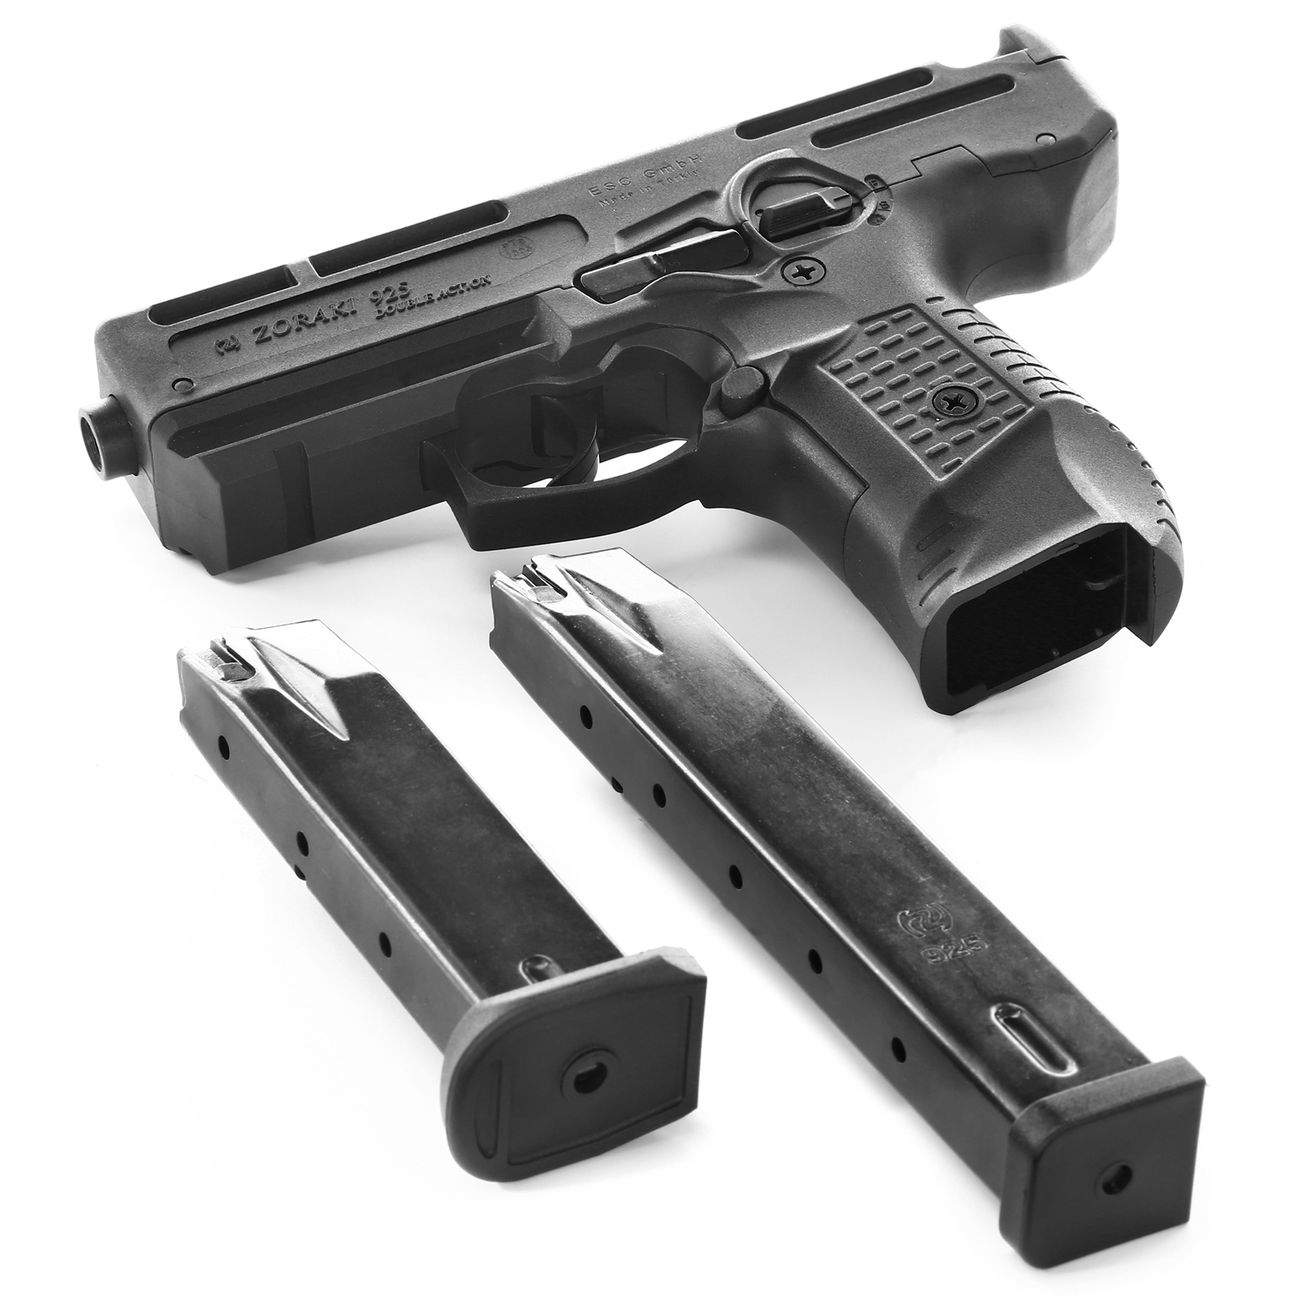 Zoraki 925 Schreckschuss-Maschinenpistole 9mm P.A.K. schwarz inkl. 2 Magazinen u. Polymerkoffer Bild 1